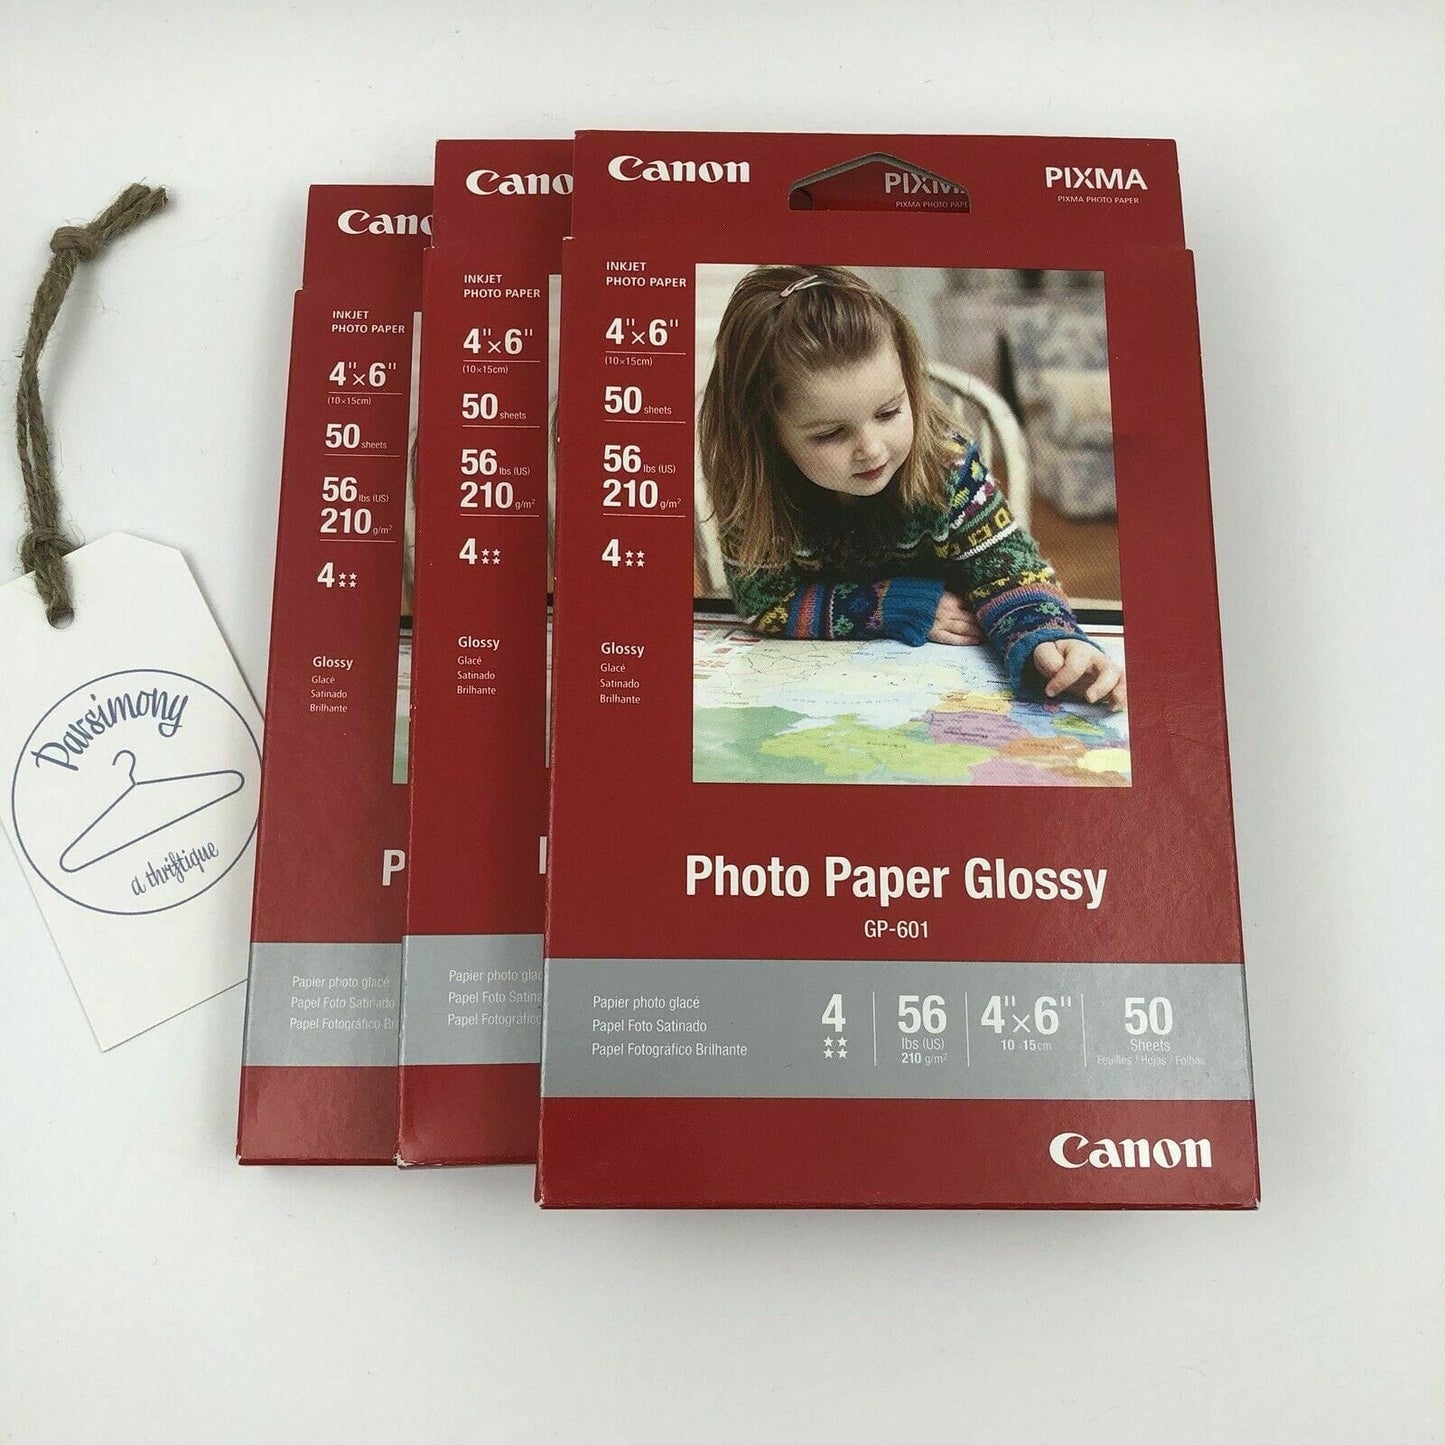 Lot of 3 - Canon Pixma 4" x 6" Photo Paper Glossy GP-601 Packs / 50 Sheets ea